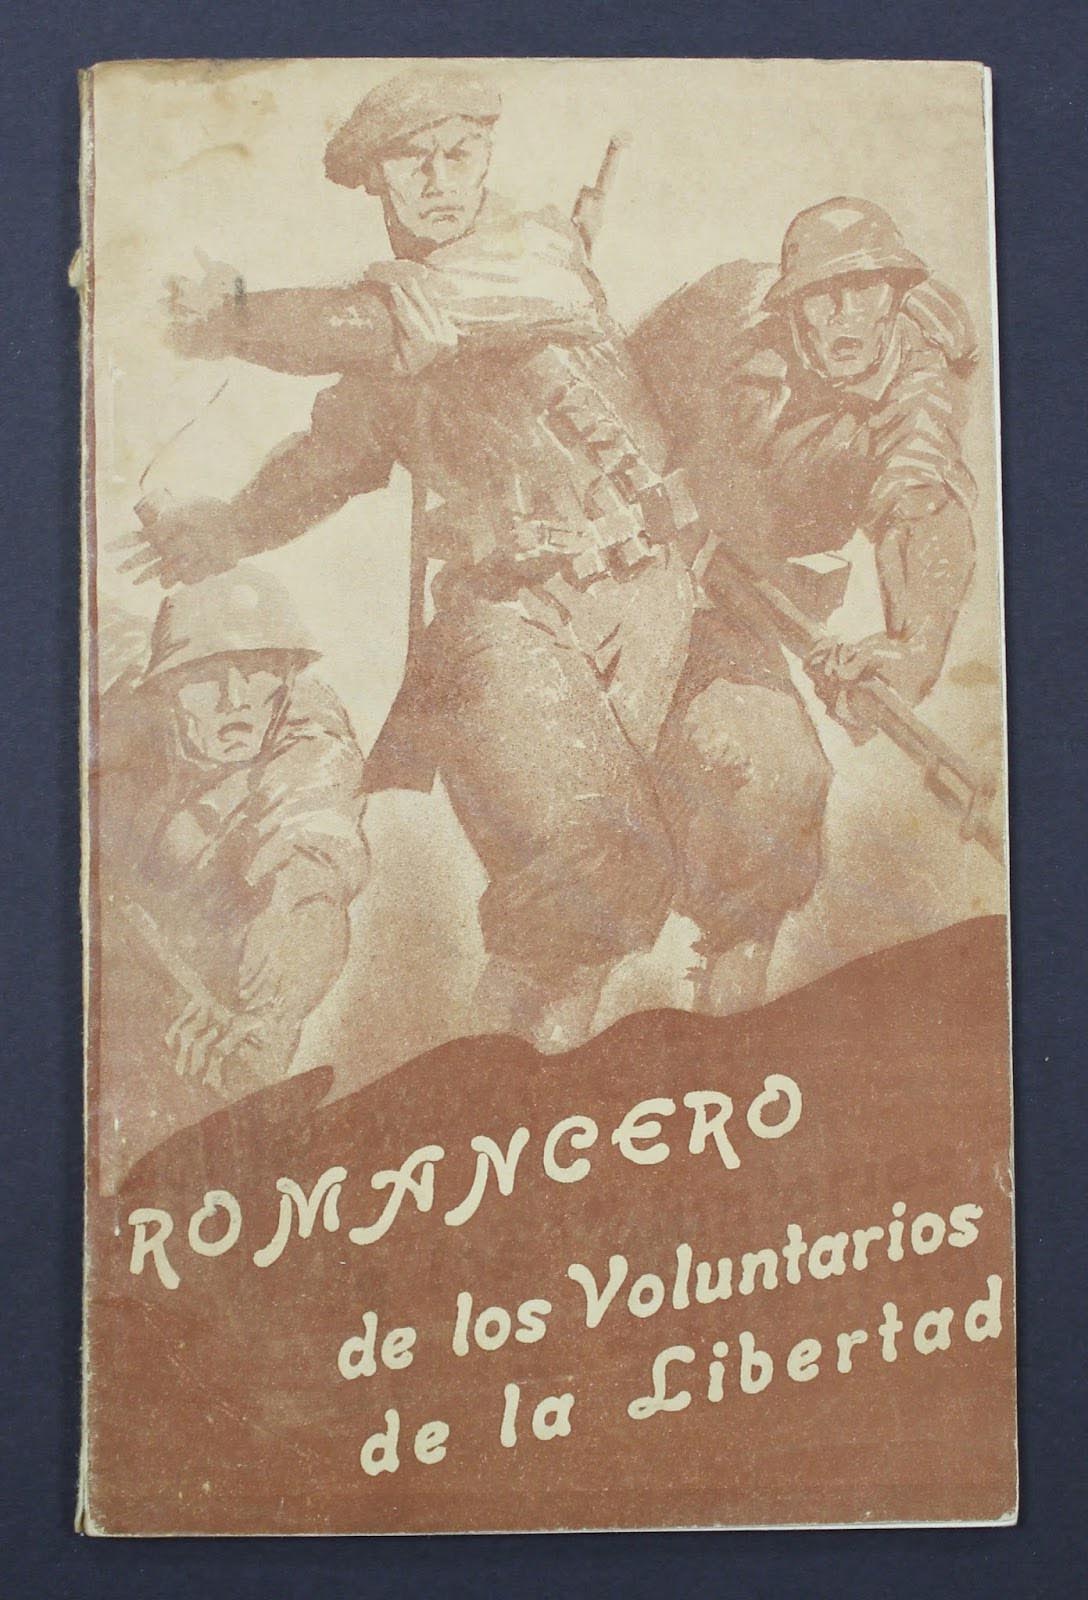 Cover of Civil War publication "Romancero de los Voluntarios de la Libertad."